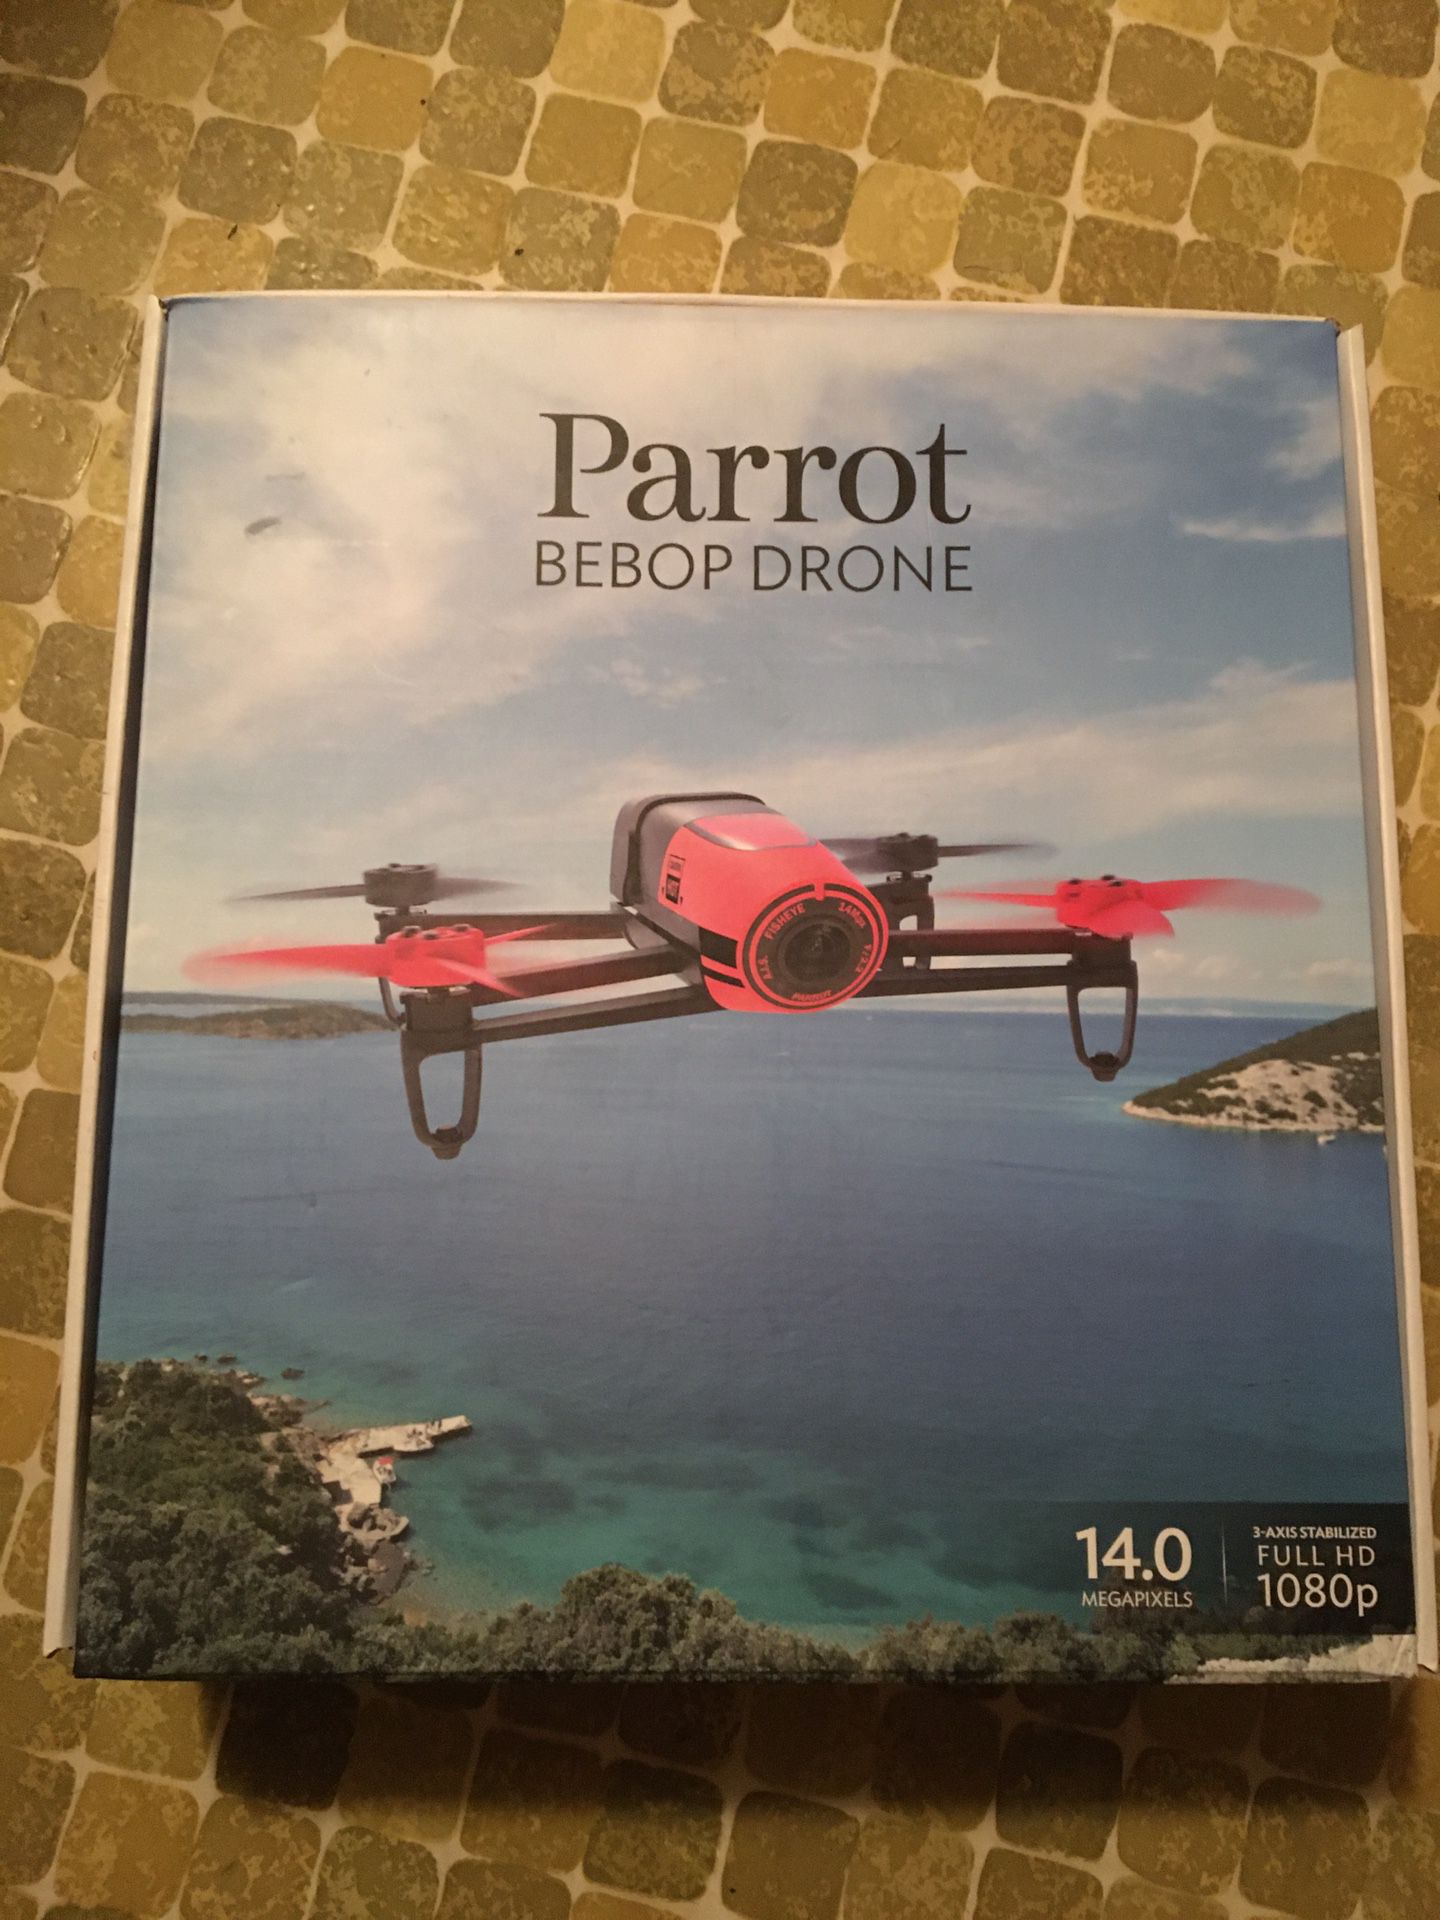 Parrot drone make offer